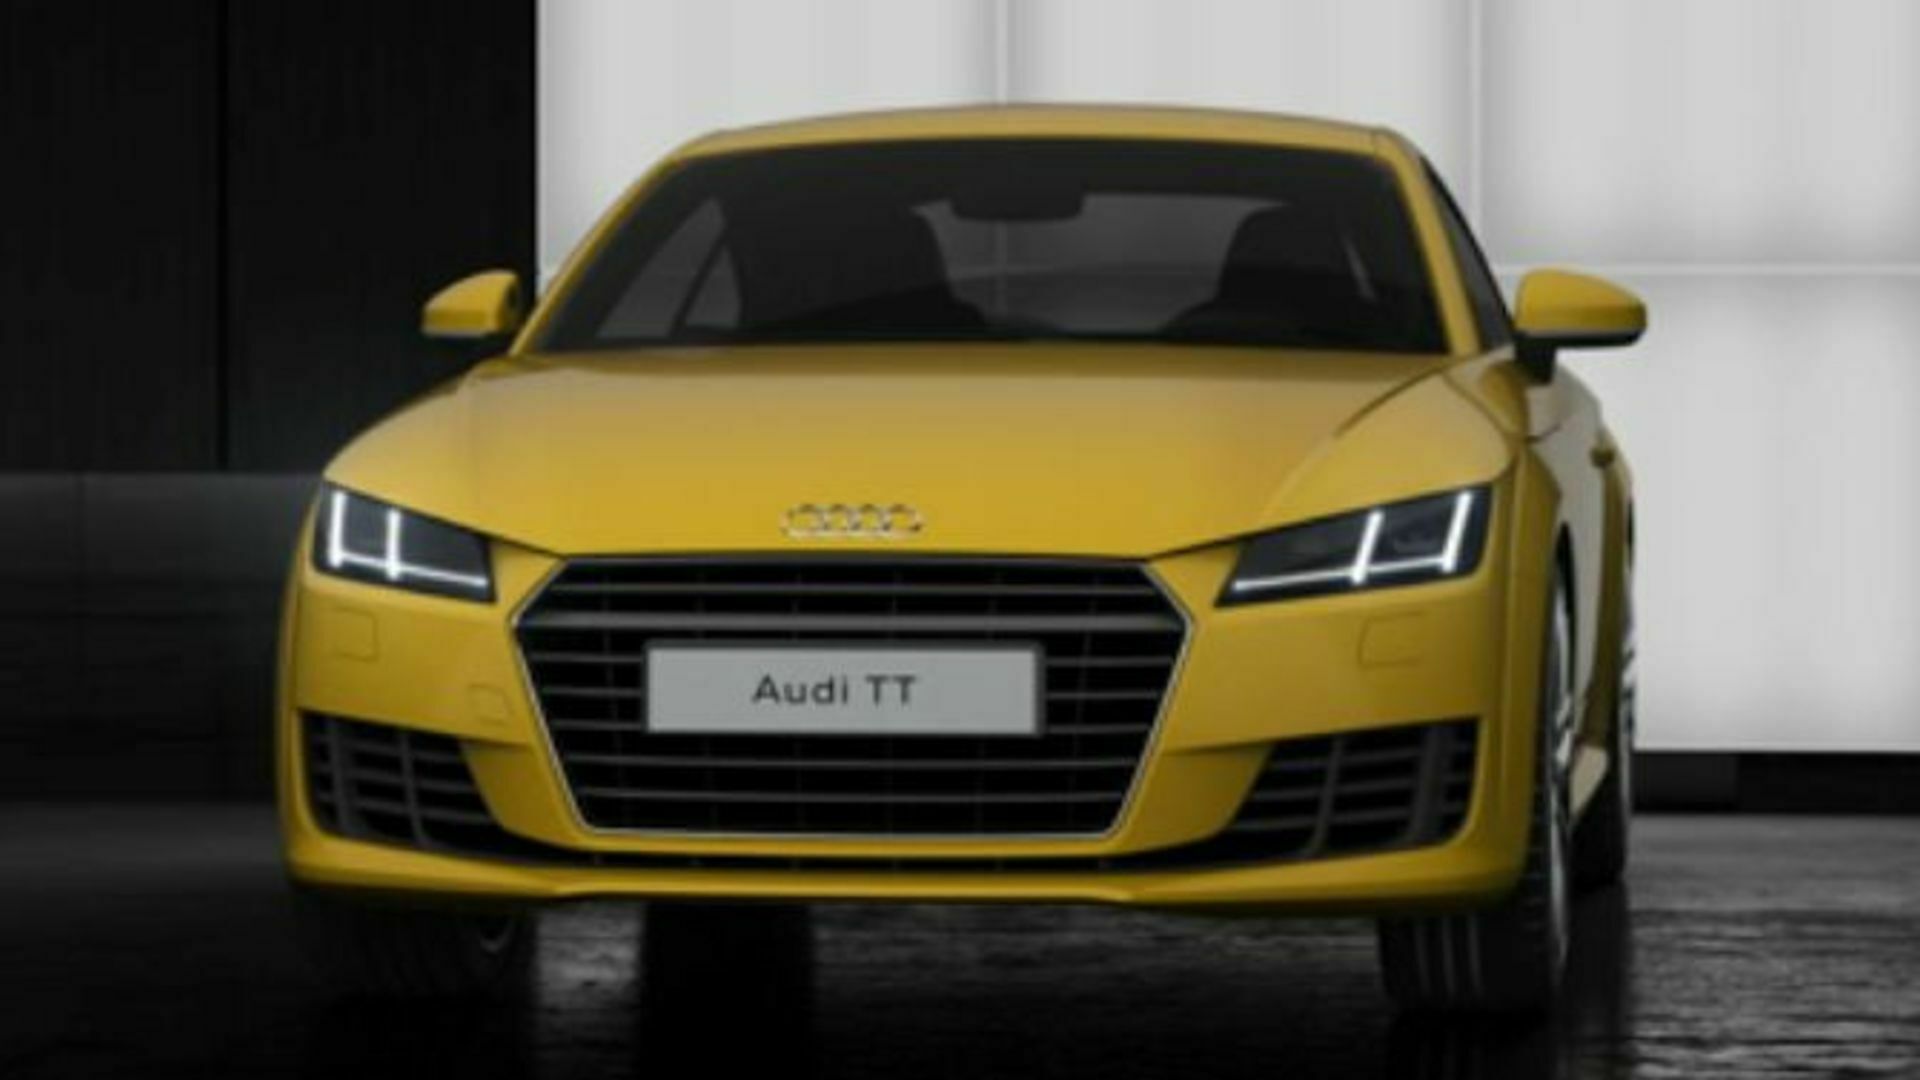 Signature Audi daytime running lights - Animation